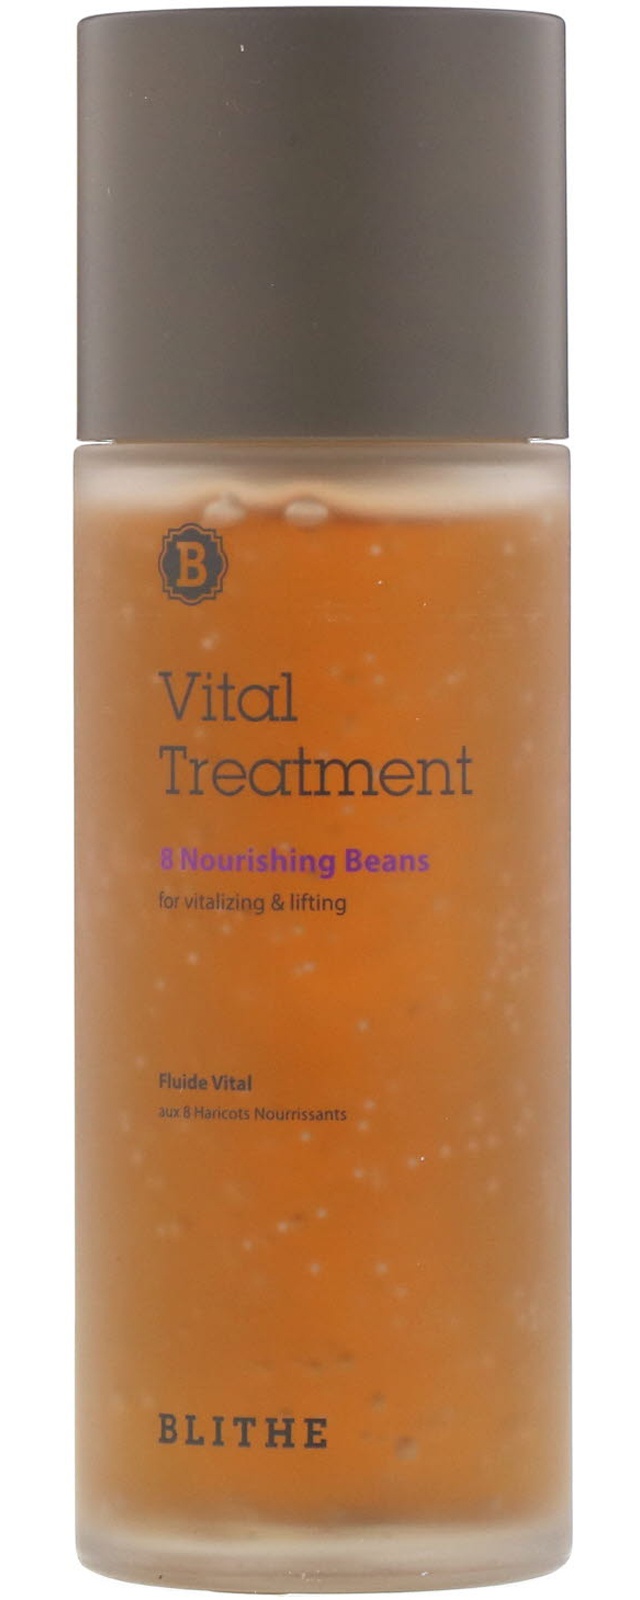 Blithe 8 Nourishing Beans Vital Treatment